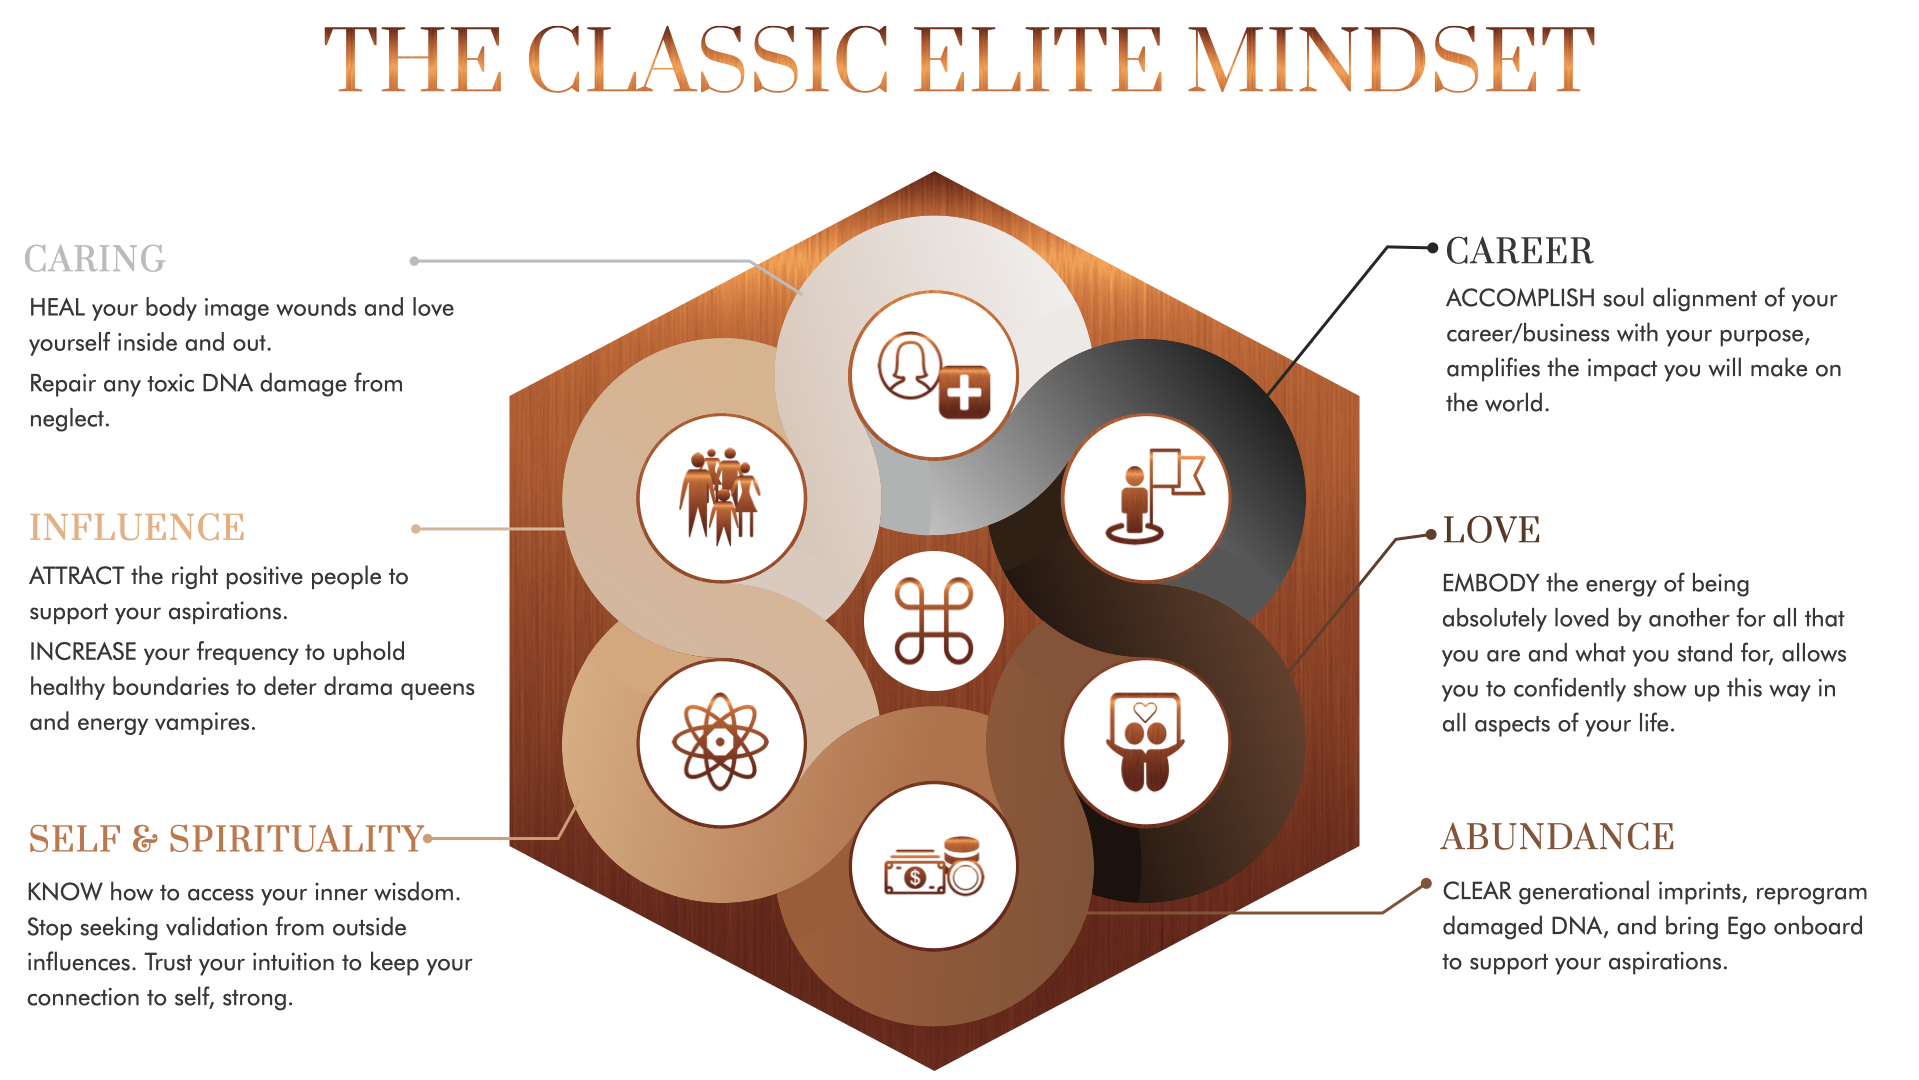 The Classic Elite Mindset, Caring, Influence, Self and Spirituality, Career, Love, Abundance